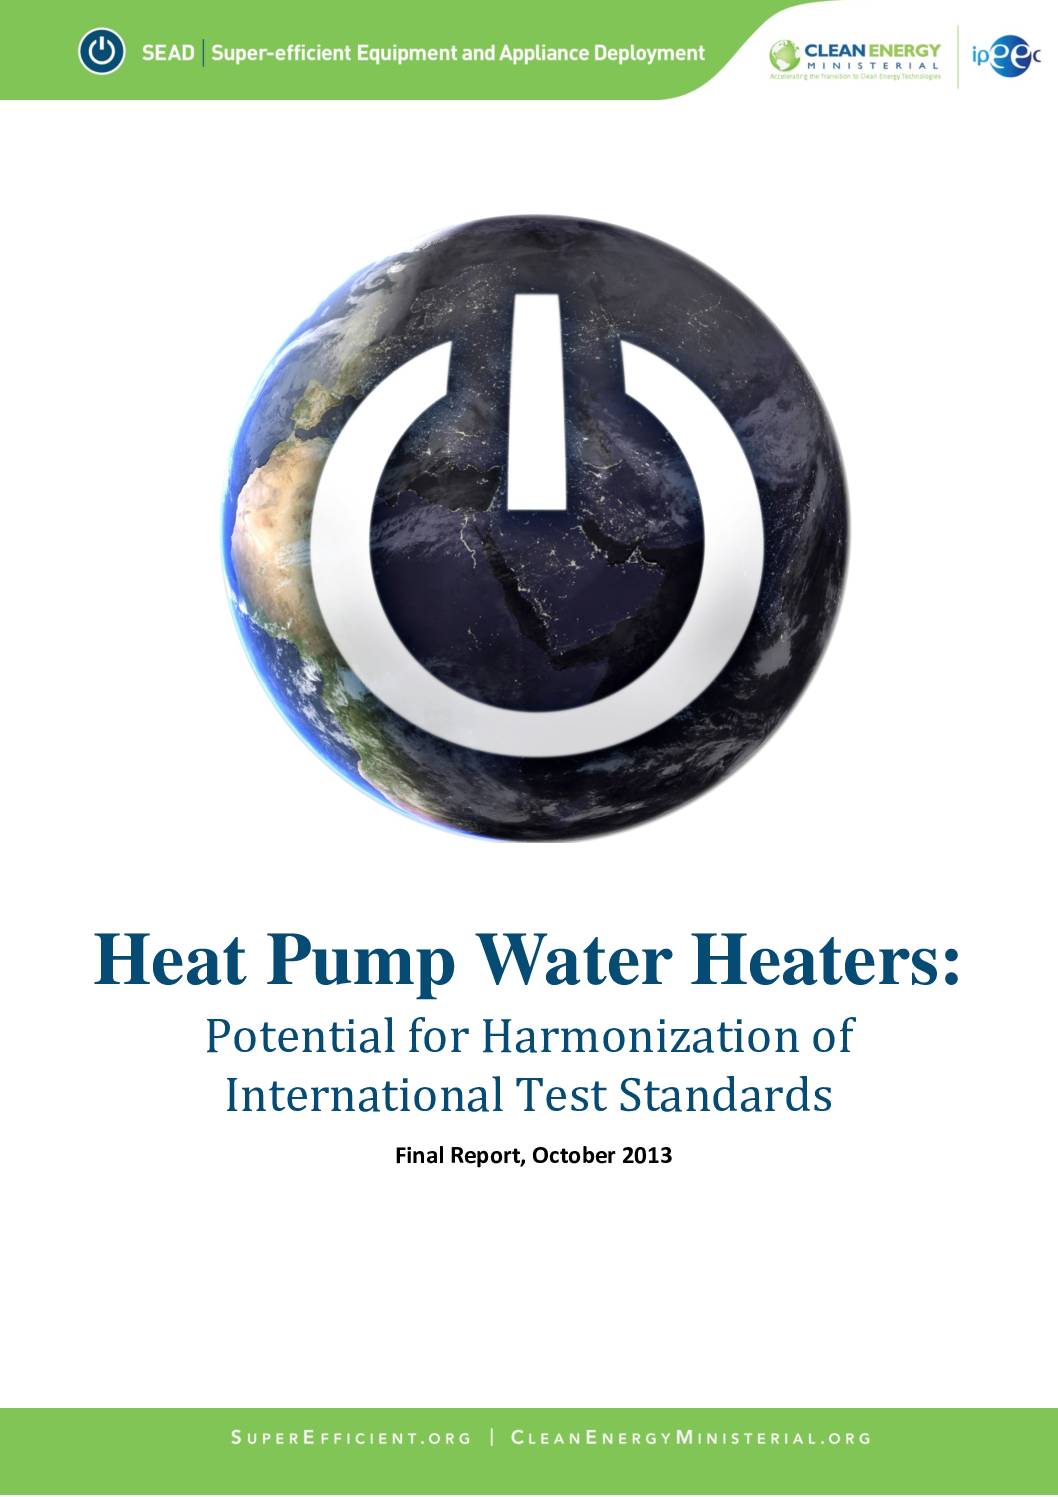 Heat Pump Water Heaters: Potential for Harmonization of International Test Standards